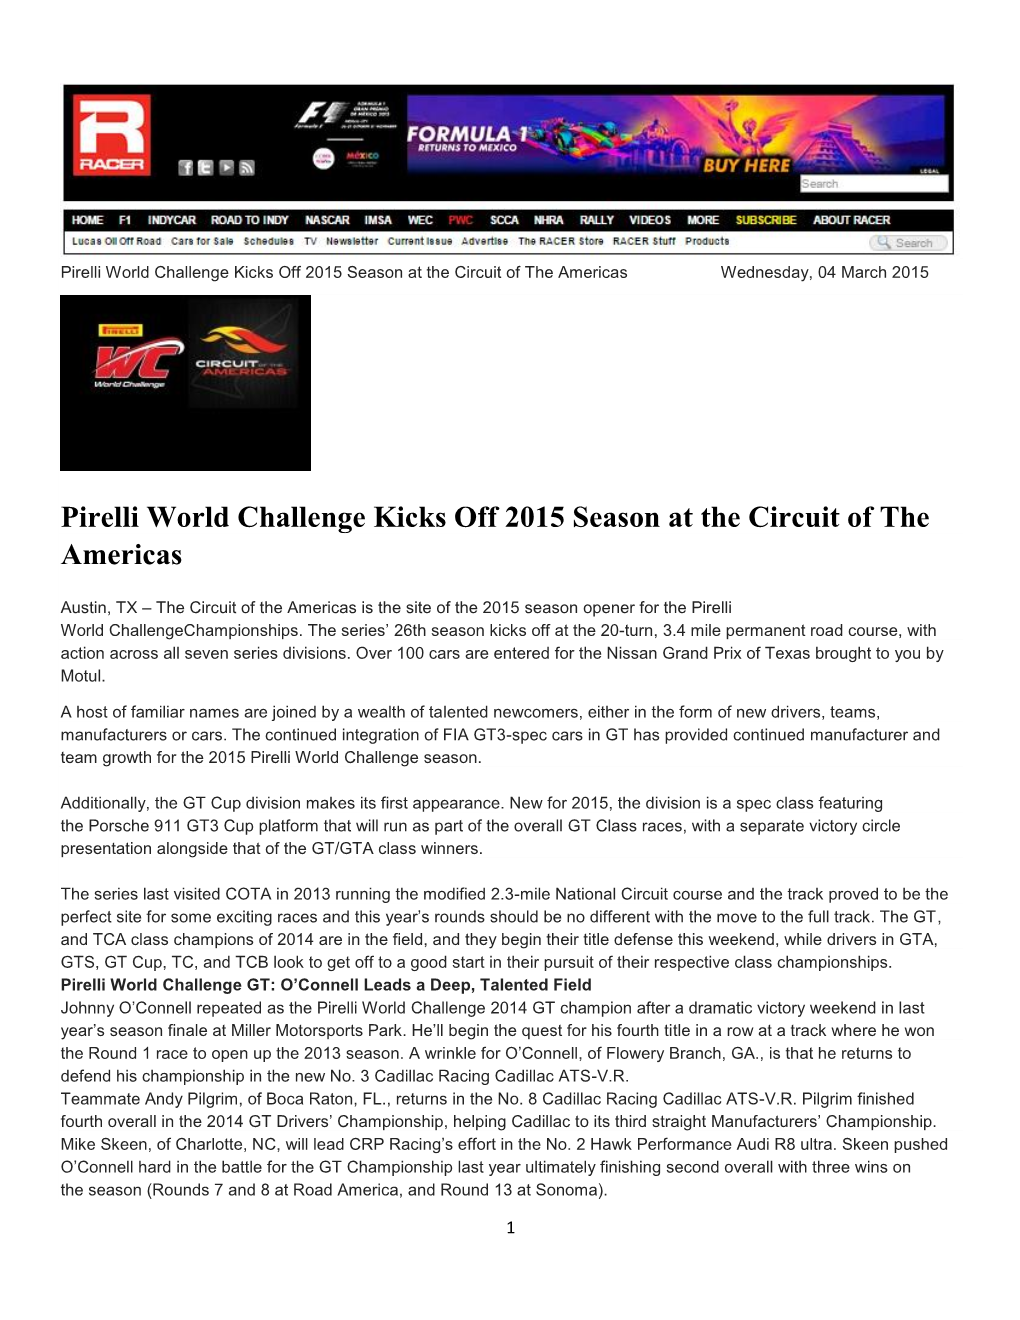 Pirelli World Challenge Kicks Off 2015 Season at the Circuit of the Americas Wednesday, 04 March 2015